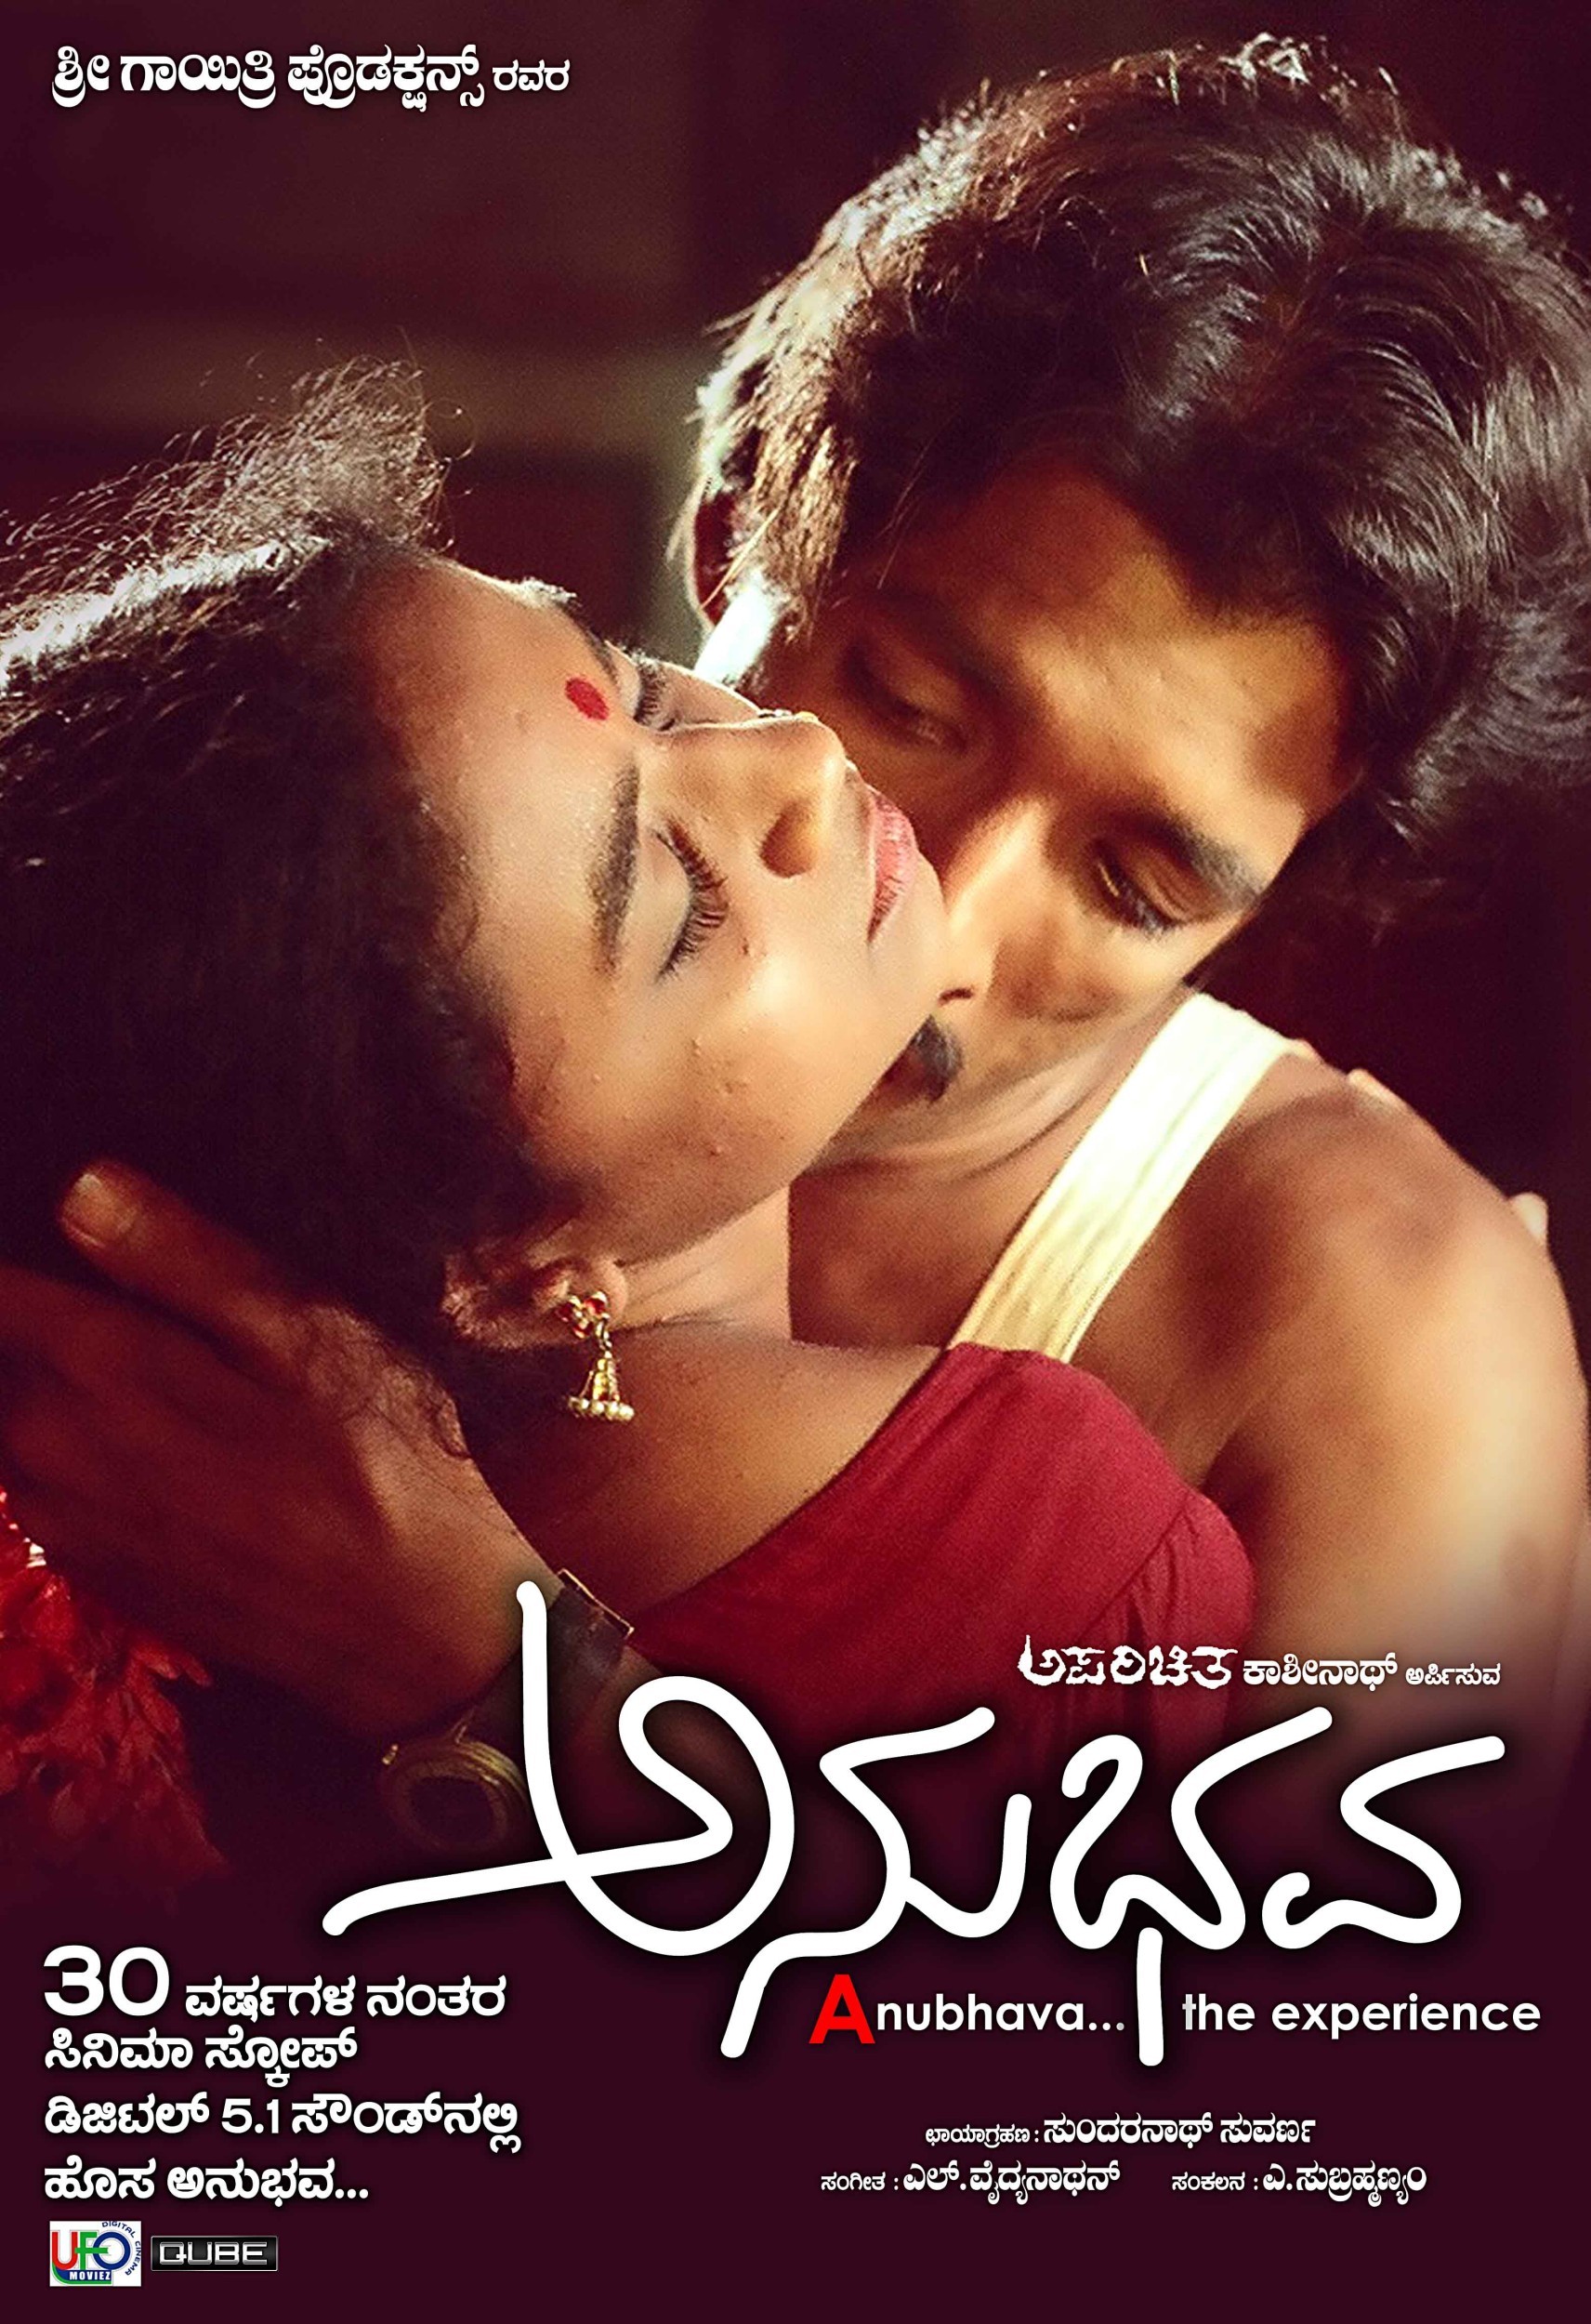 Mega Sized Movie Poster Image for Anubhava (#7 of 7)